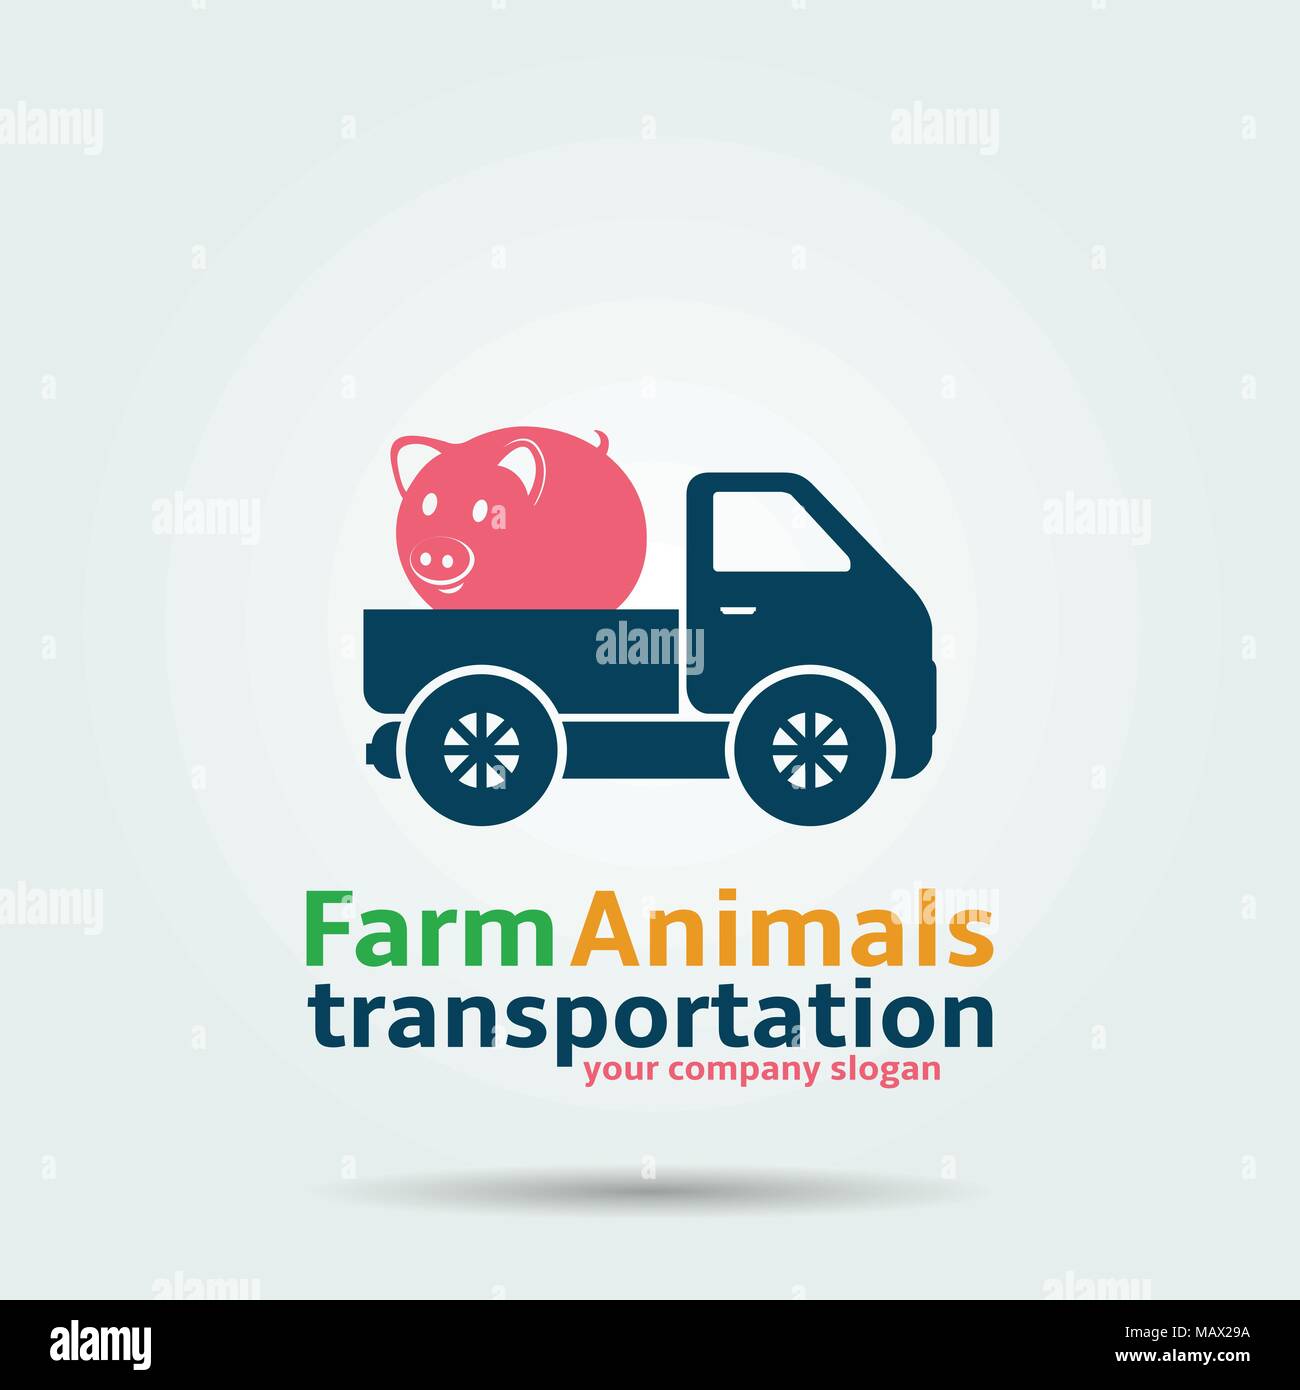 Farm animals transportation icon Stock Vector